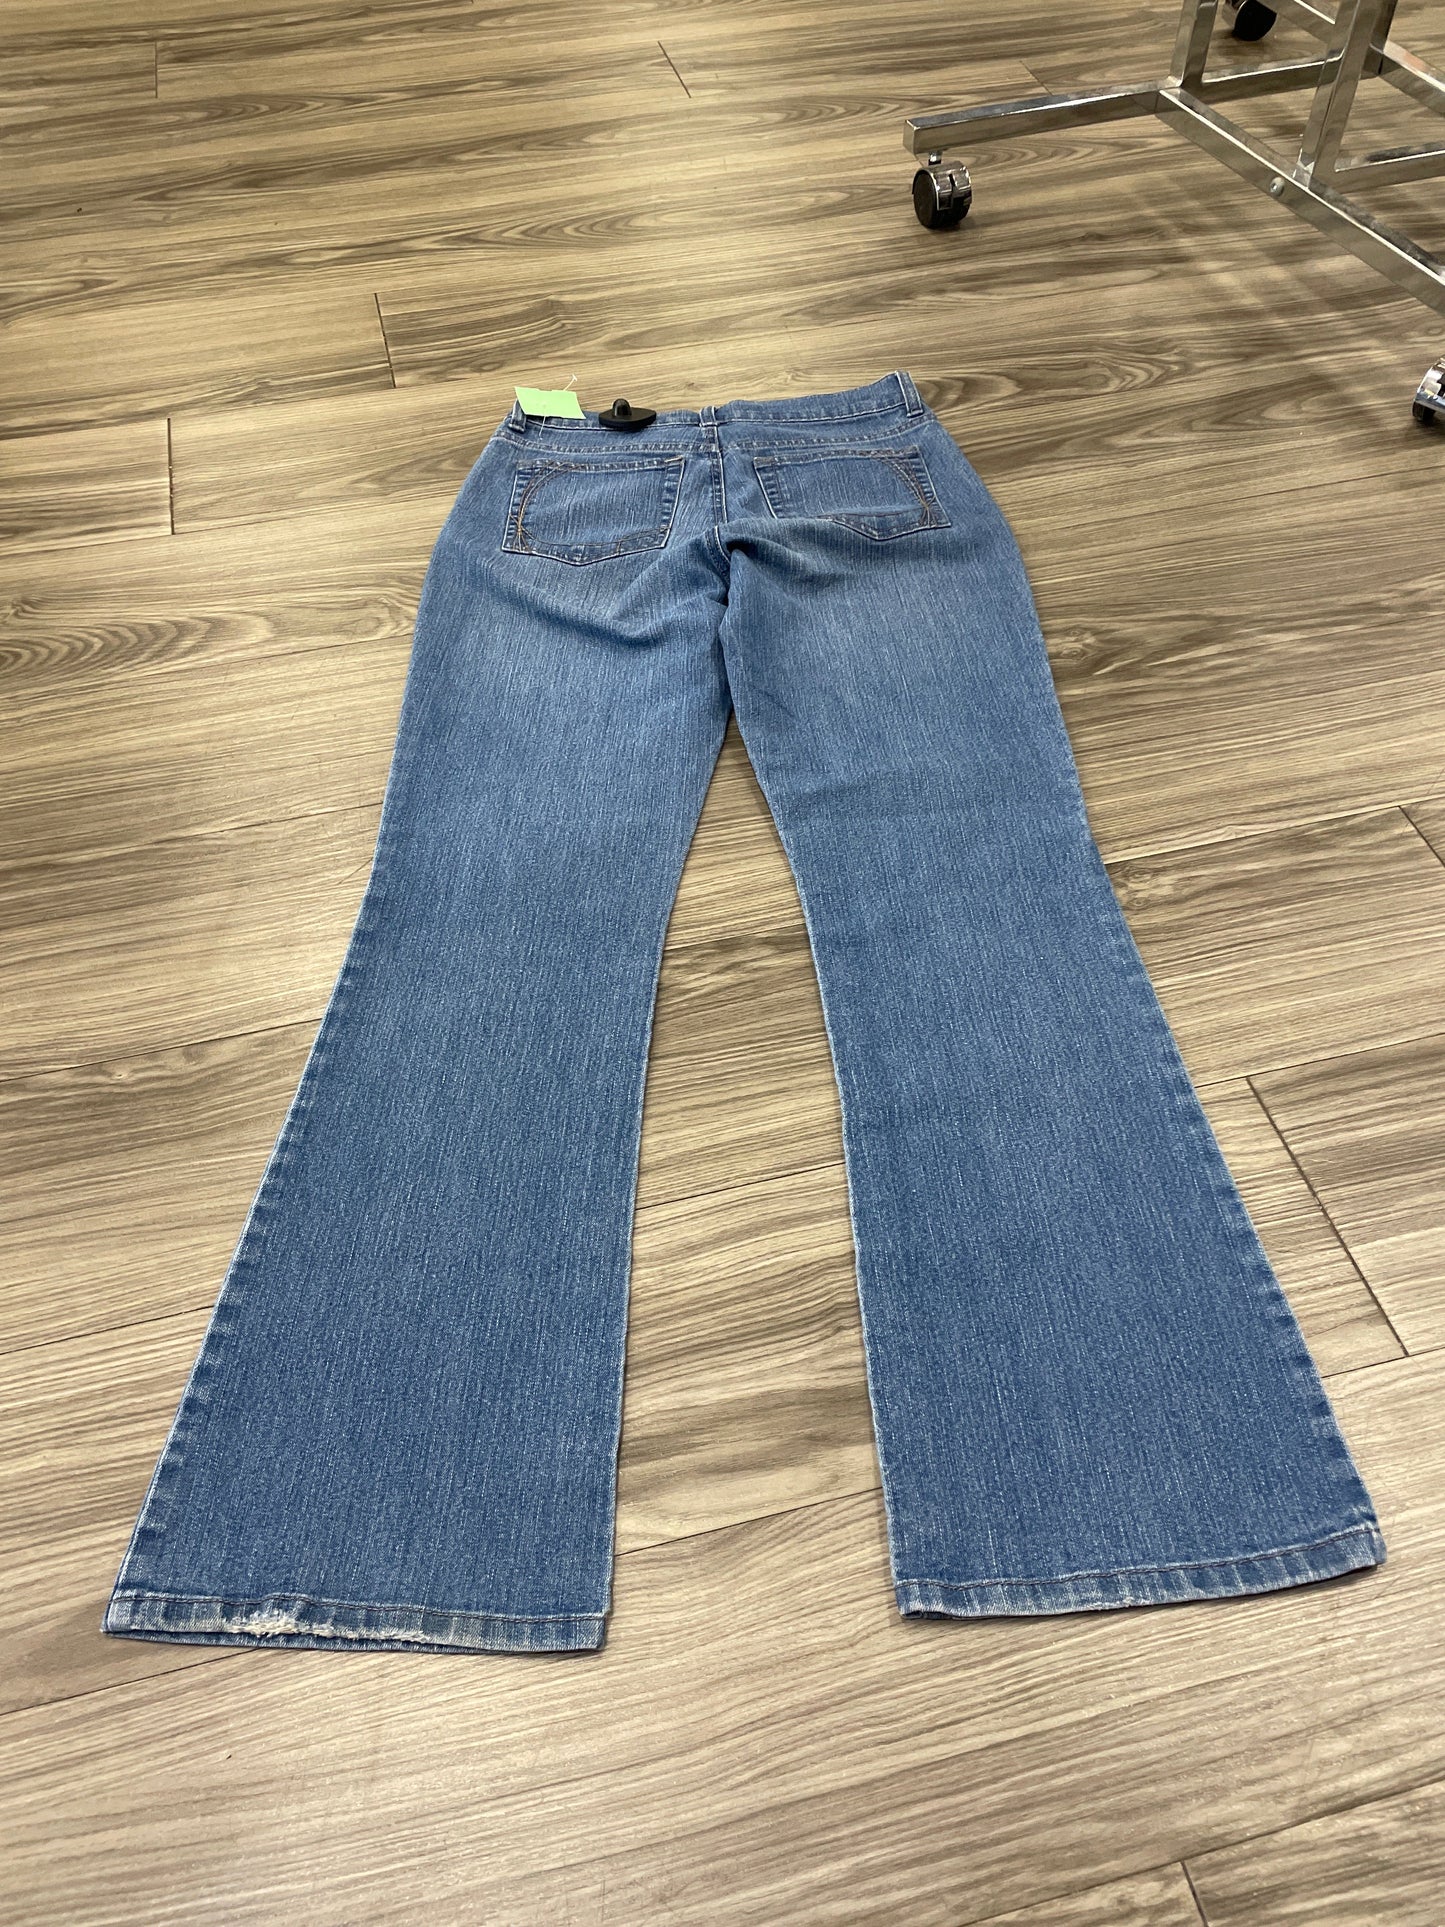 Blue Jeans Boot Cut Gloria Vanderbilt, Size 8